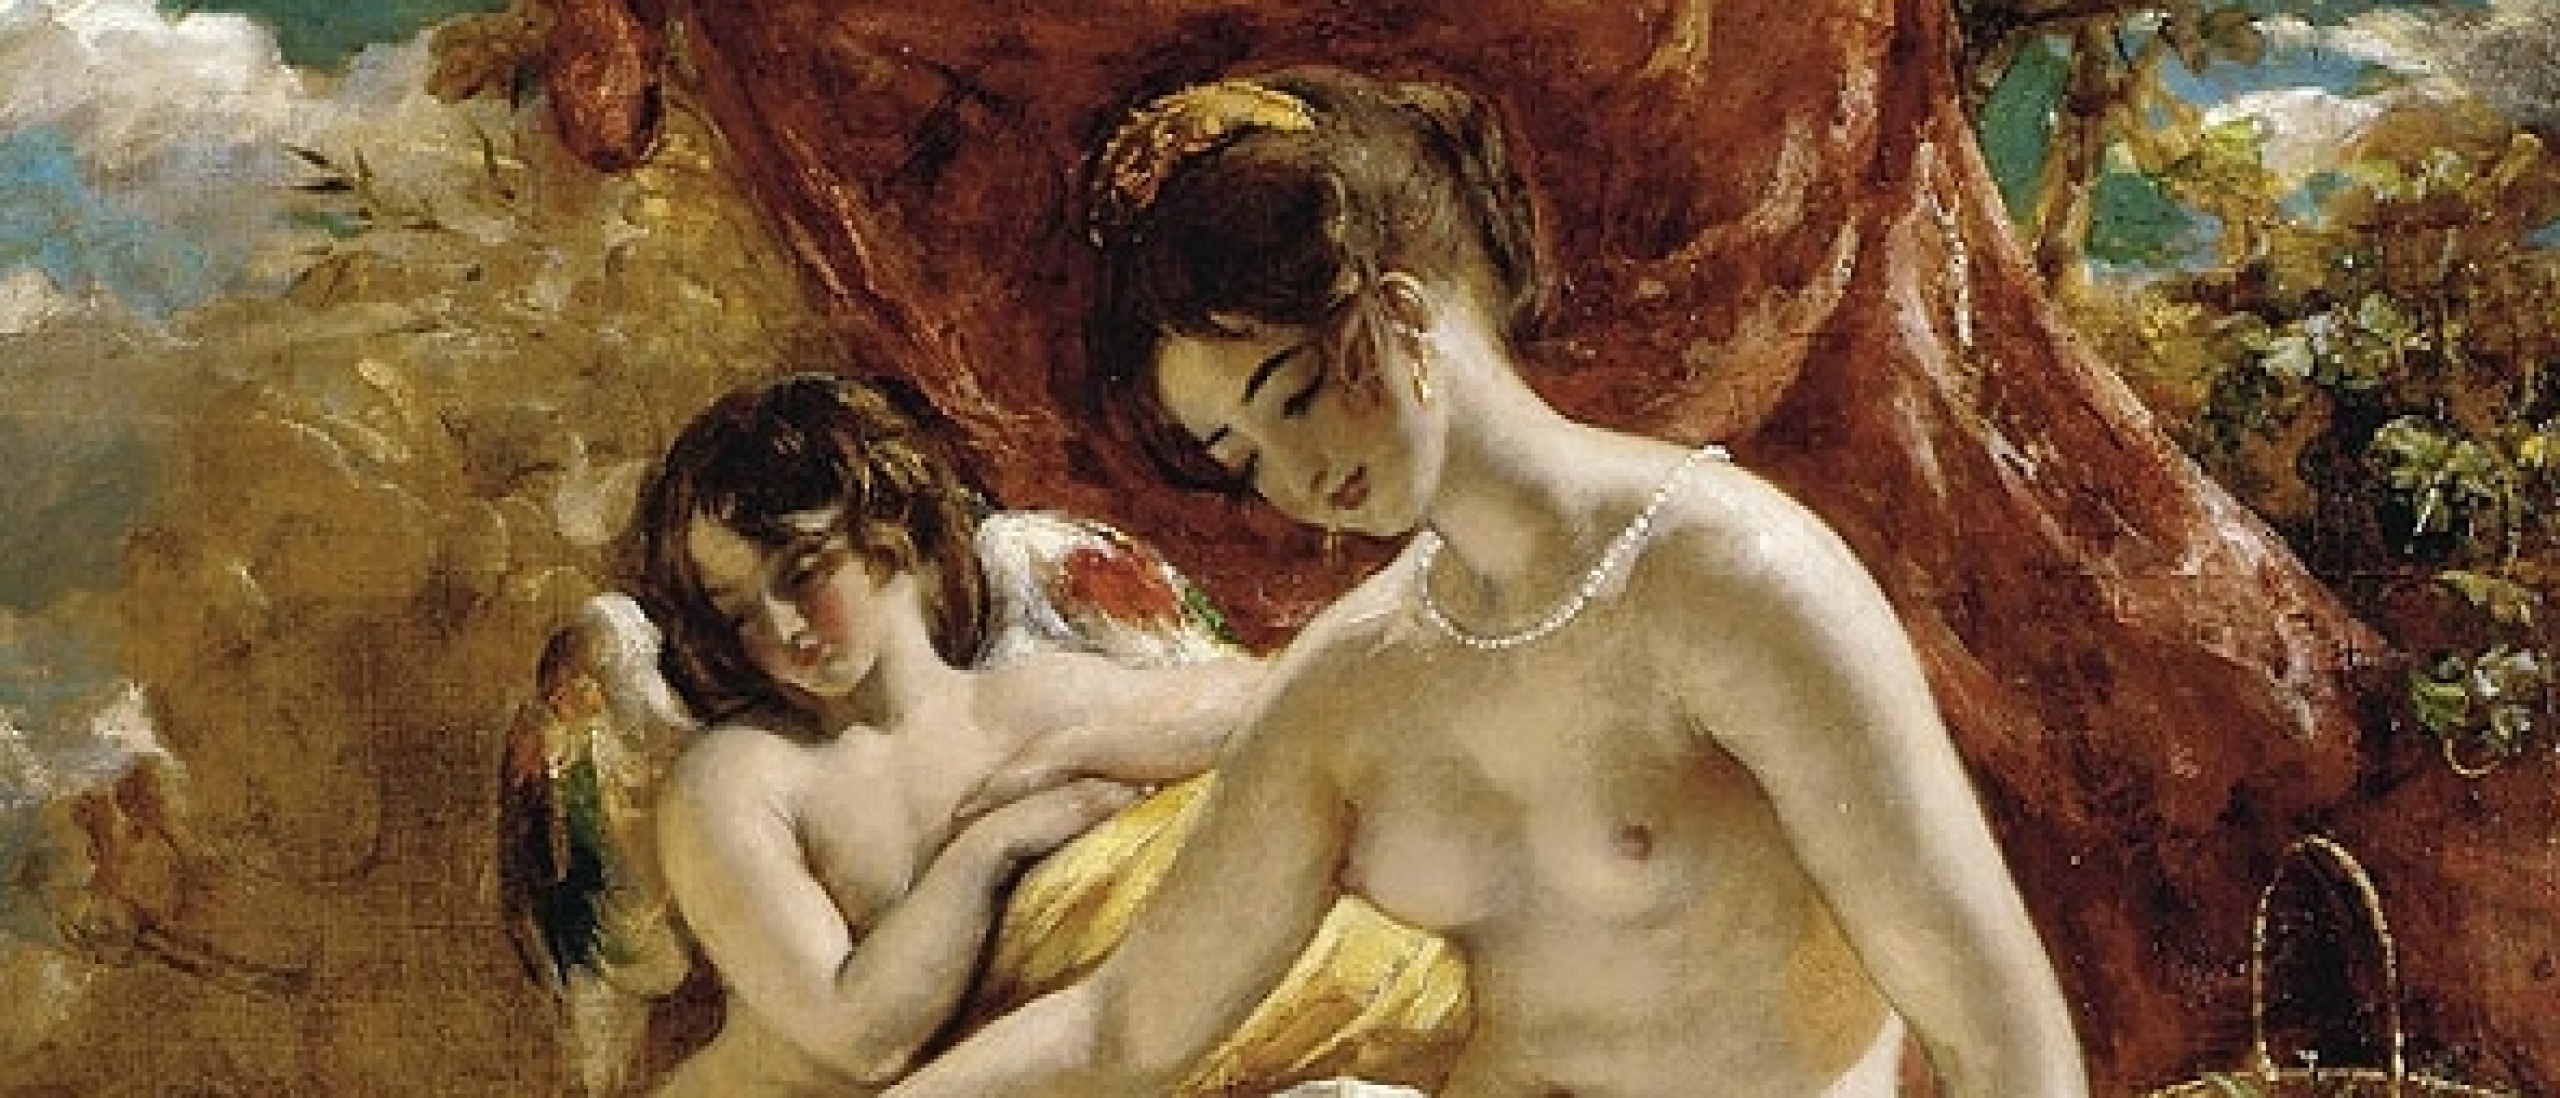 The Allegoric Nudes of William Etty, The Devil